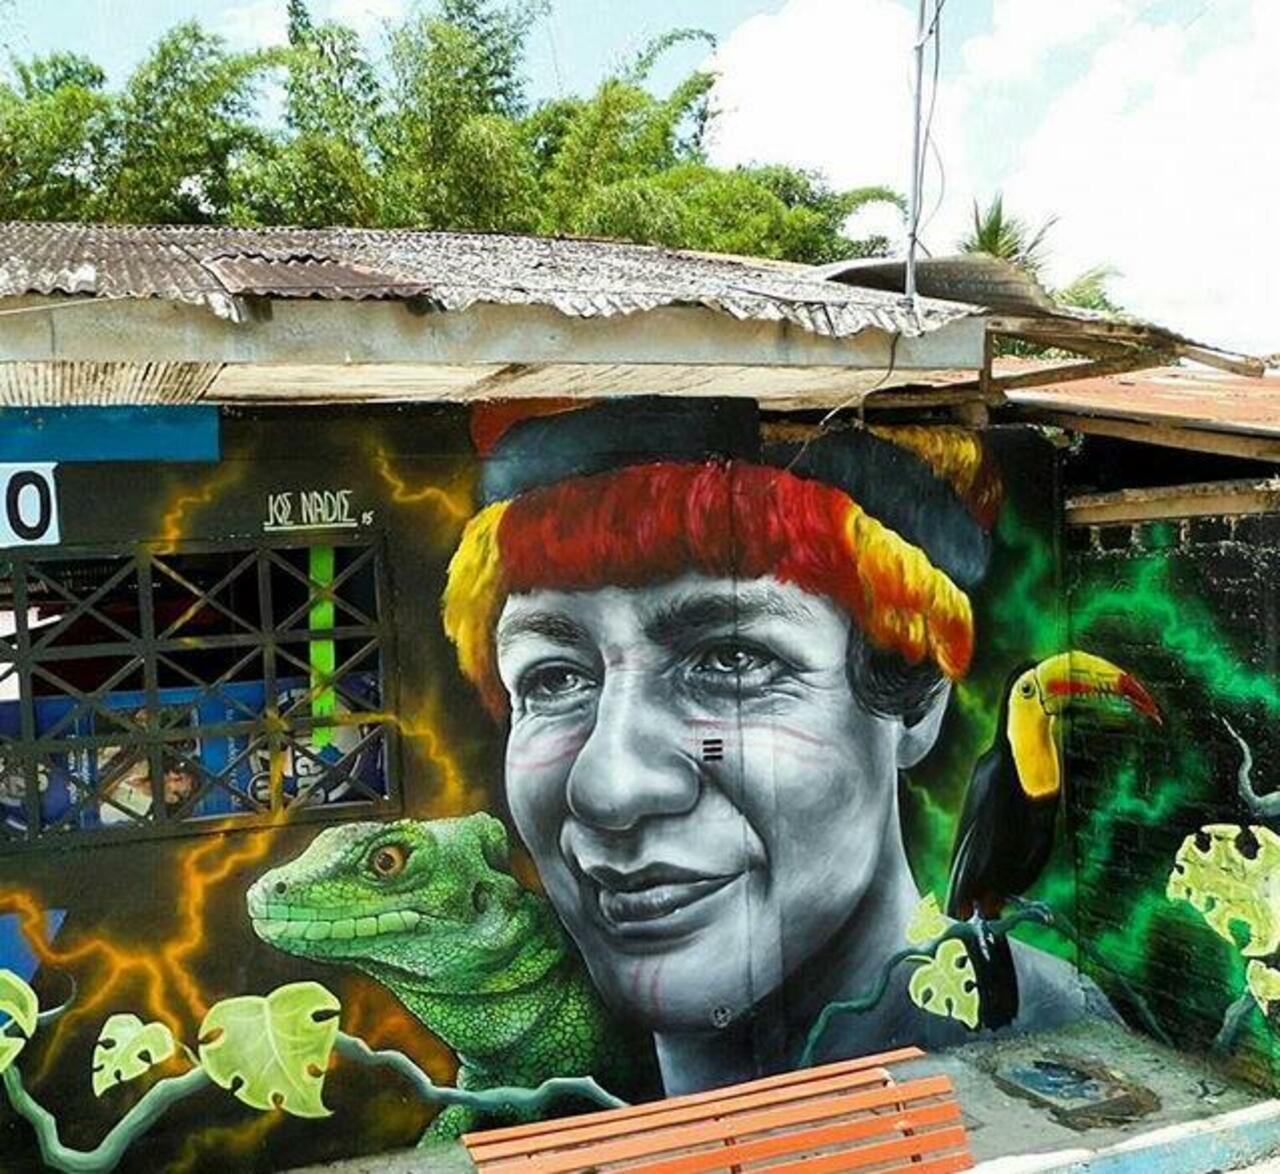 Street Art by Joe Nadie

#art #mural #graffiti #streetart http://t.co/GBNR5MtOQd